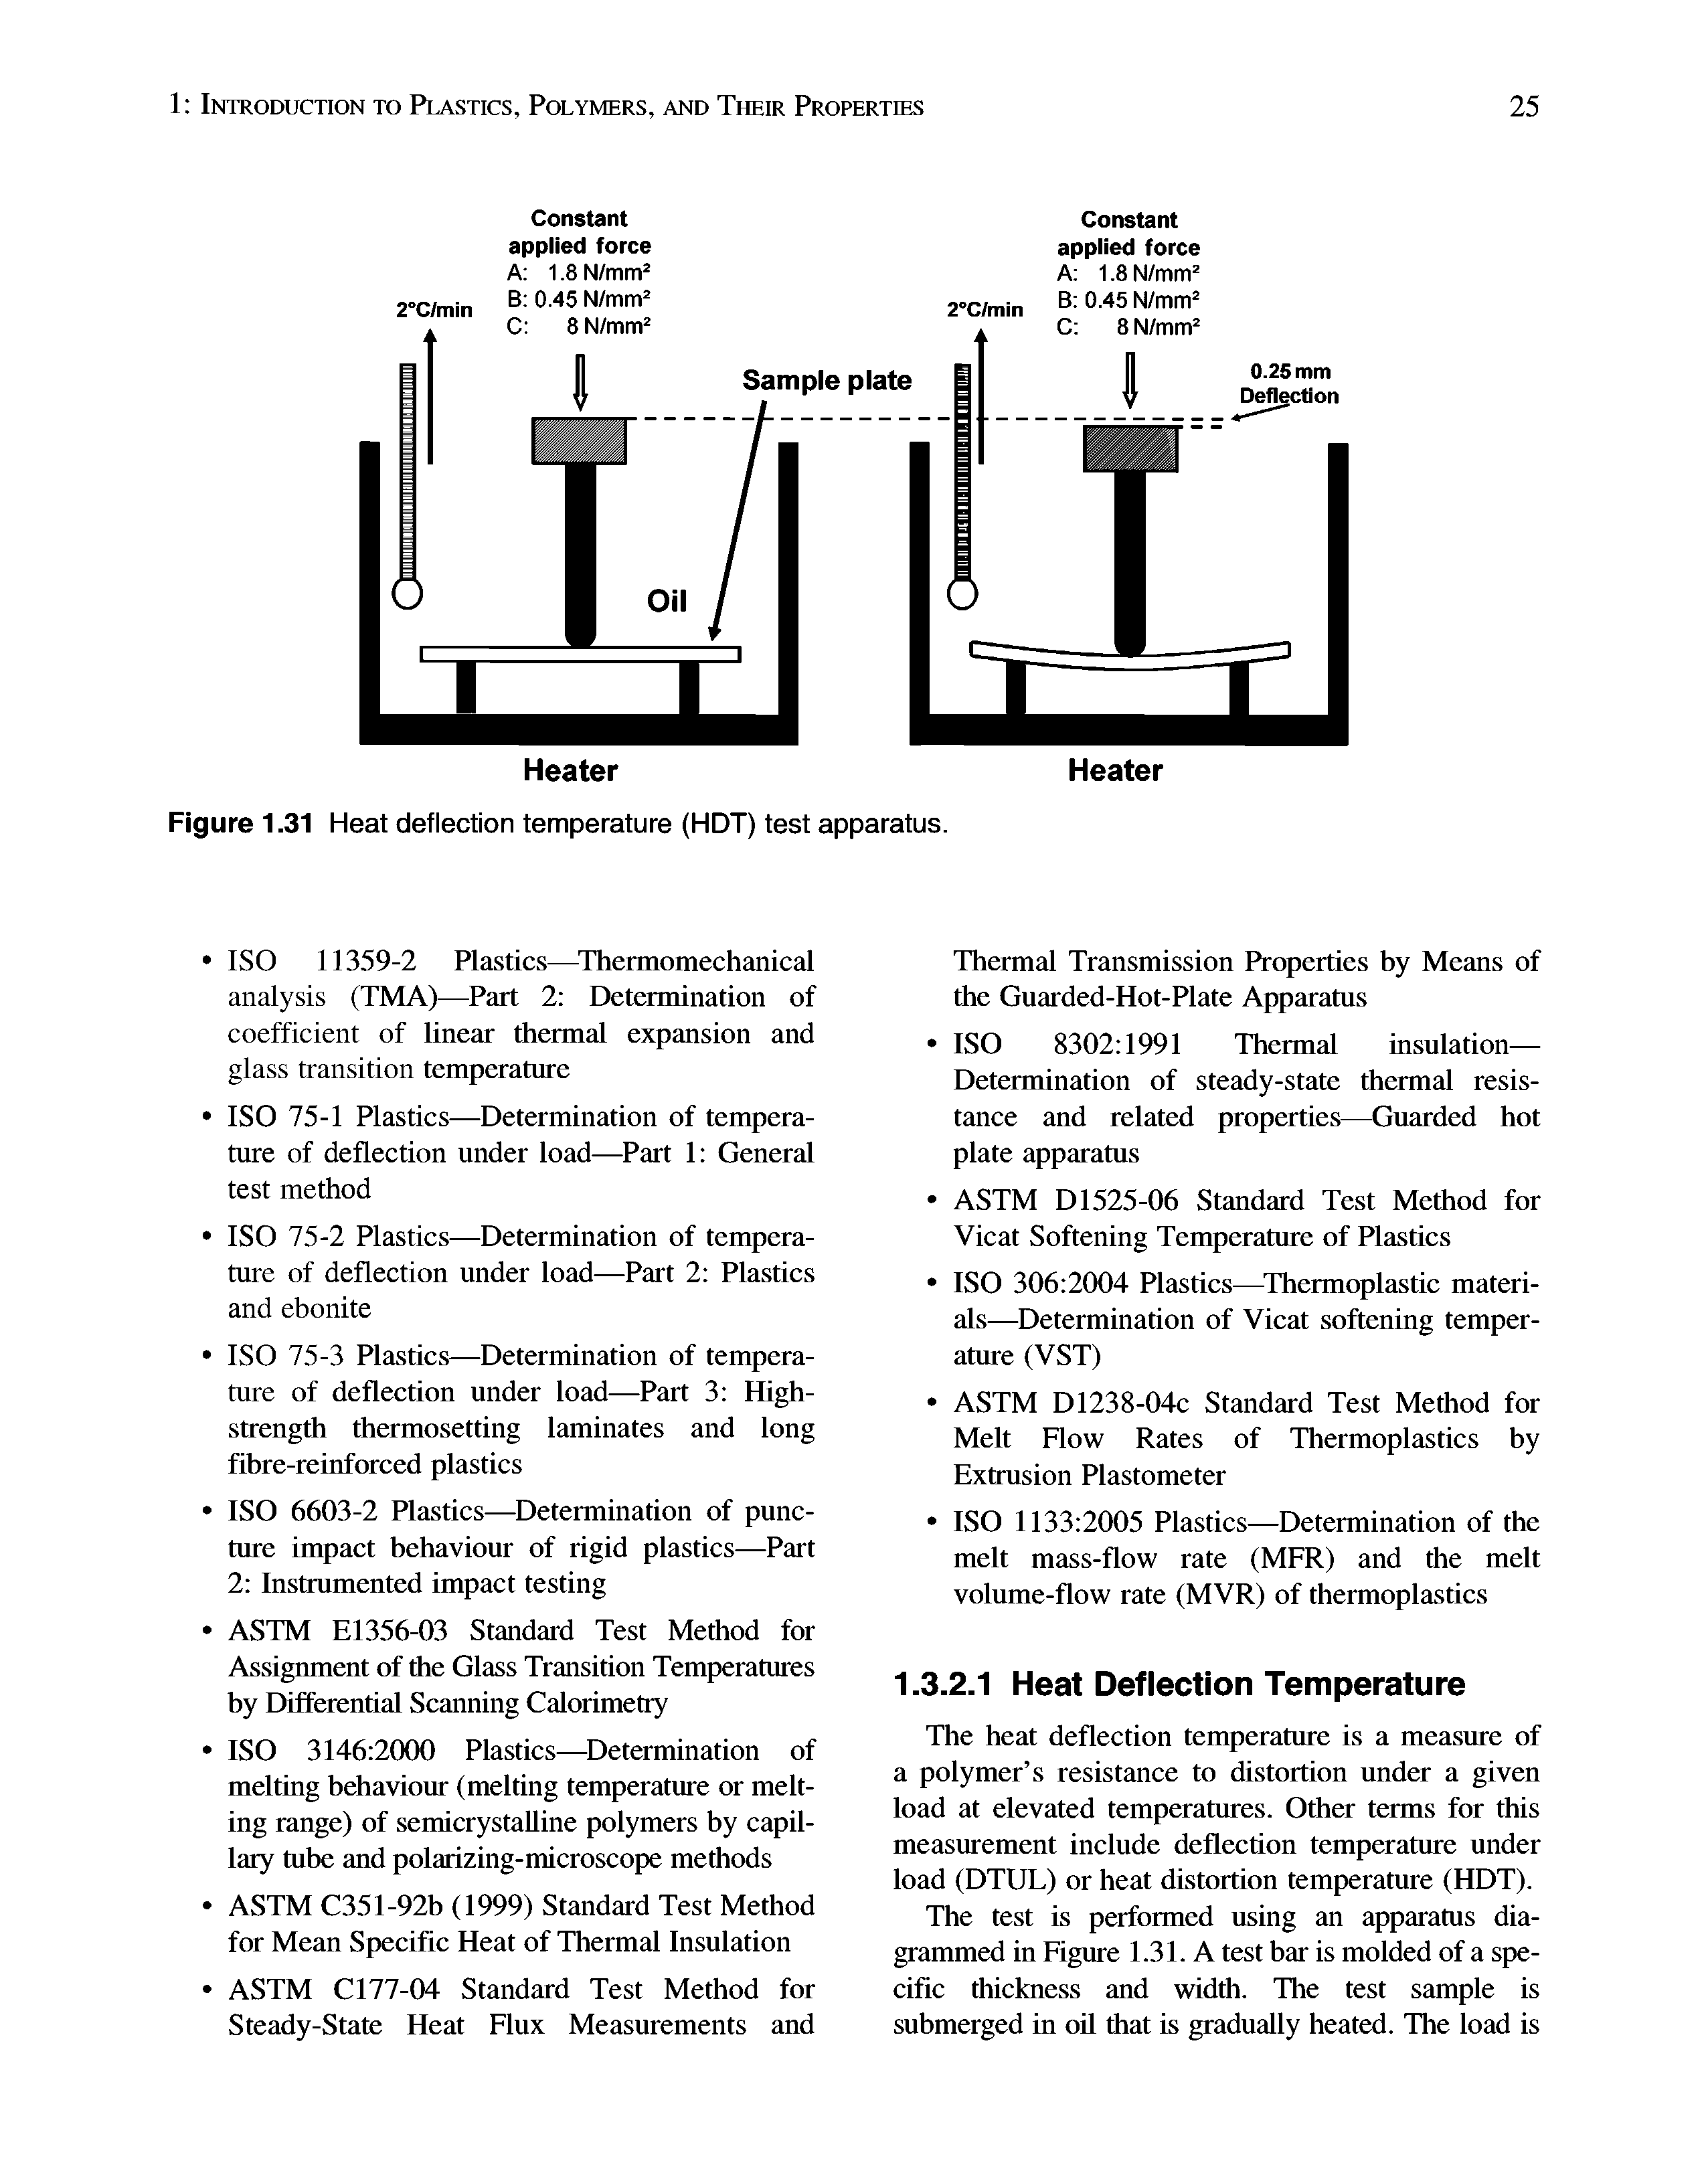 Figure 1.31 Heat deflection temperature (HDT) test apparatus.